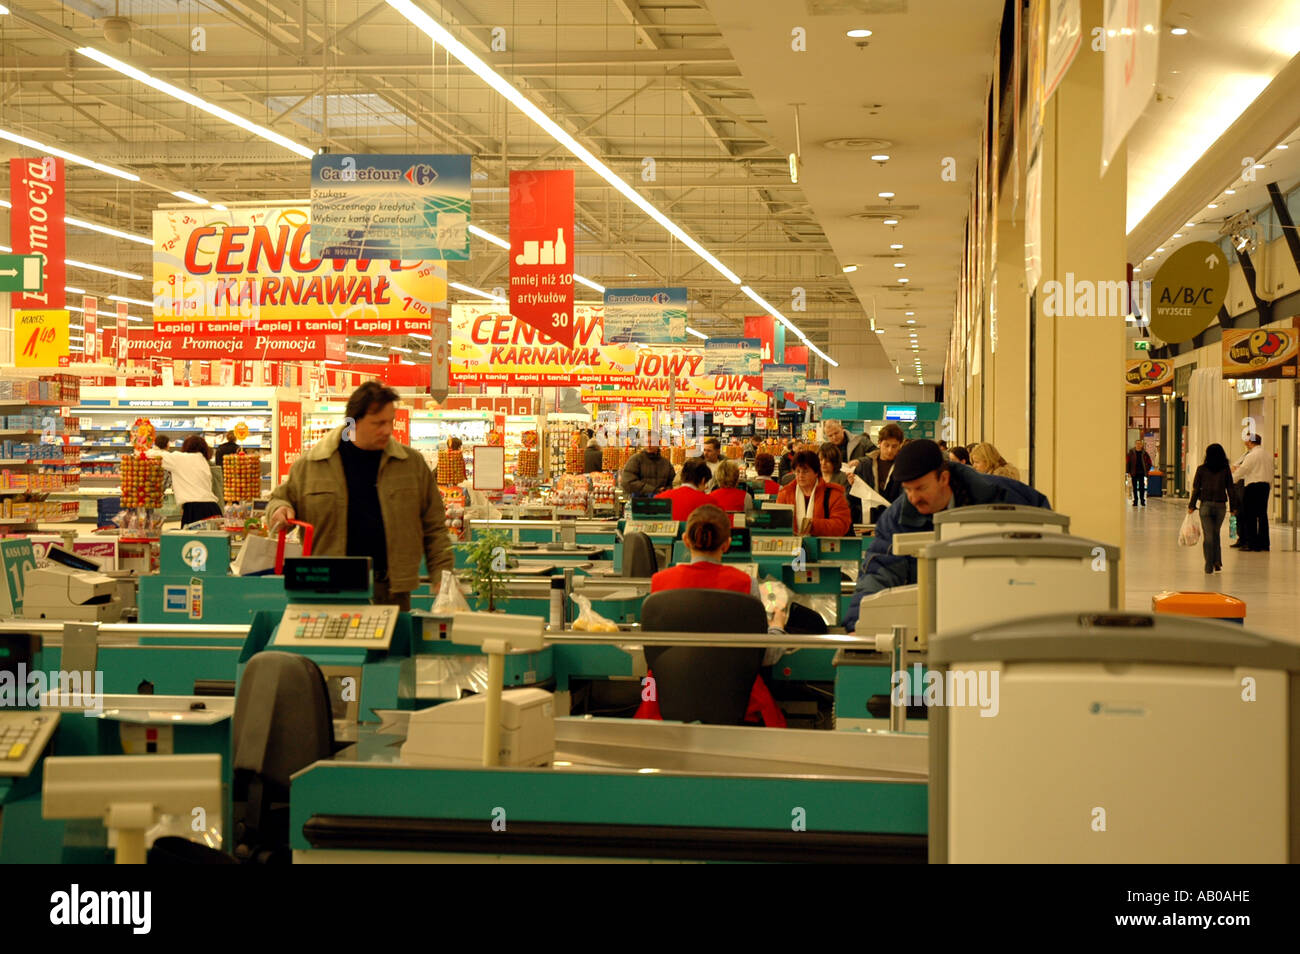 Carrefour hypermarket in Warsaw Poland Stock Photo - Alamy